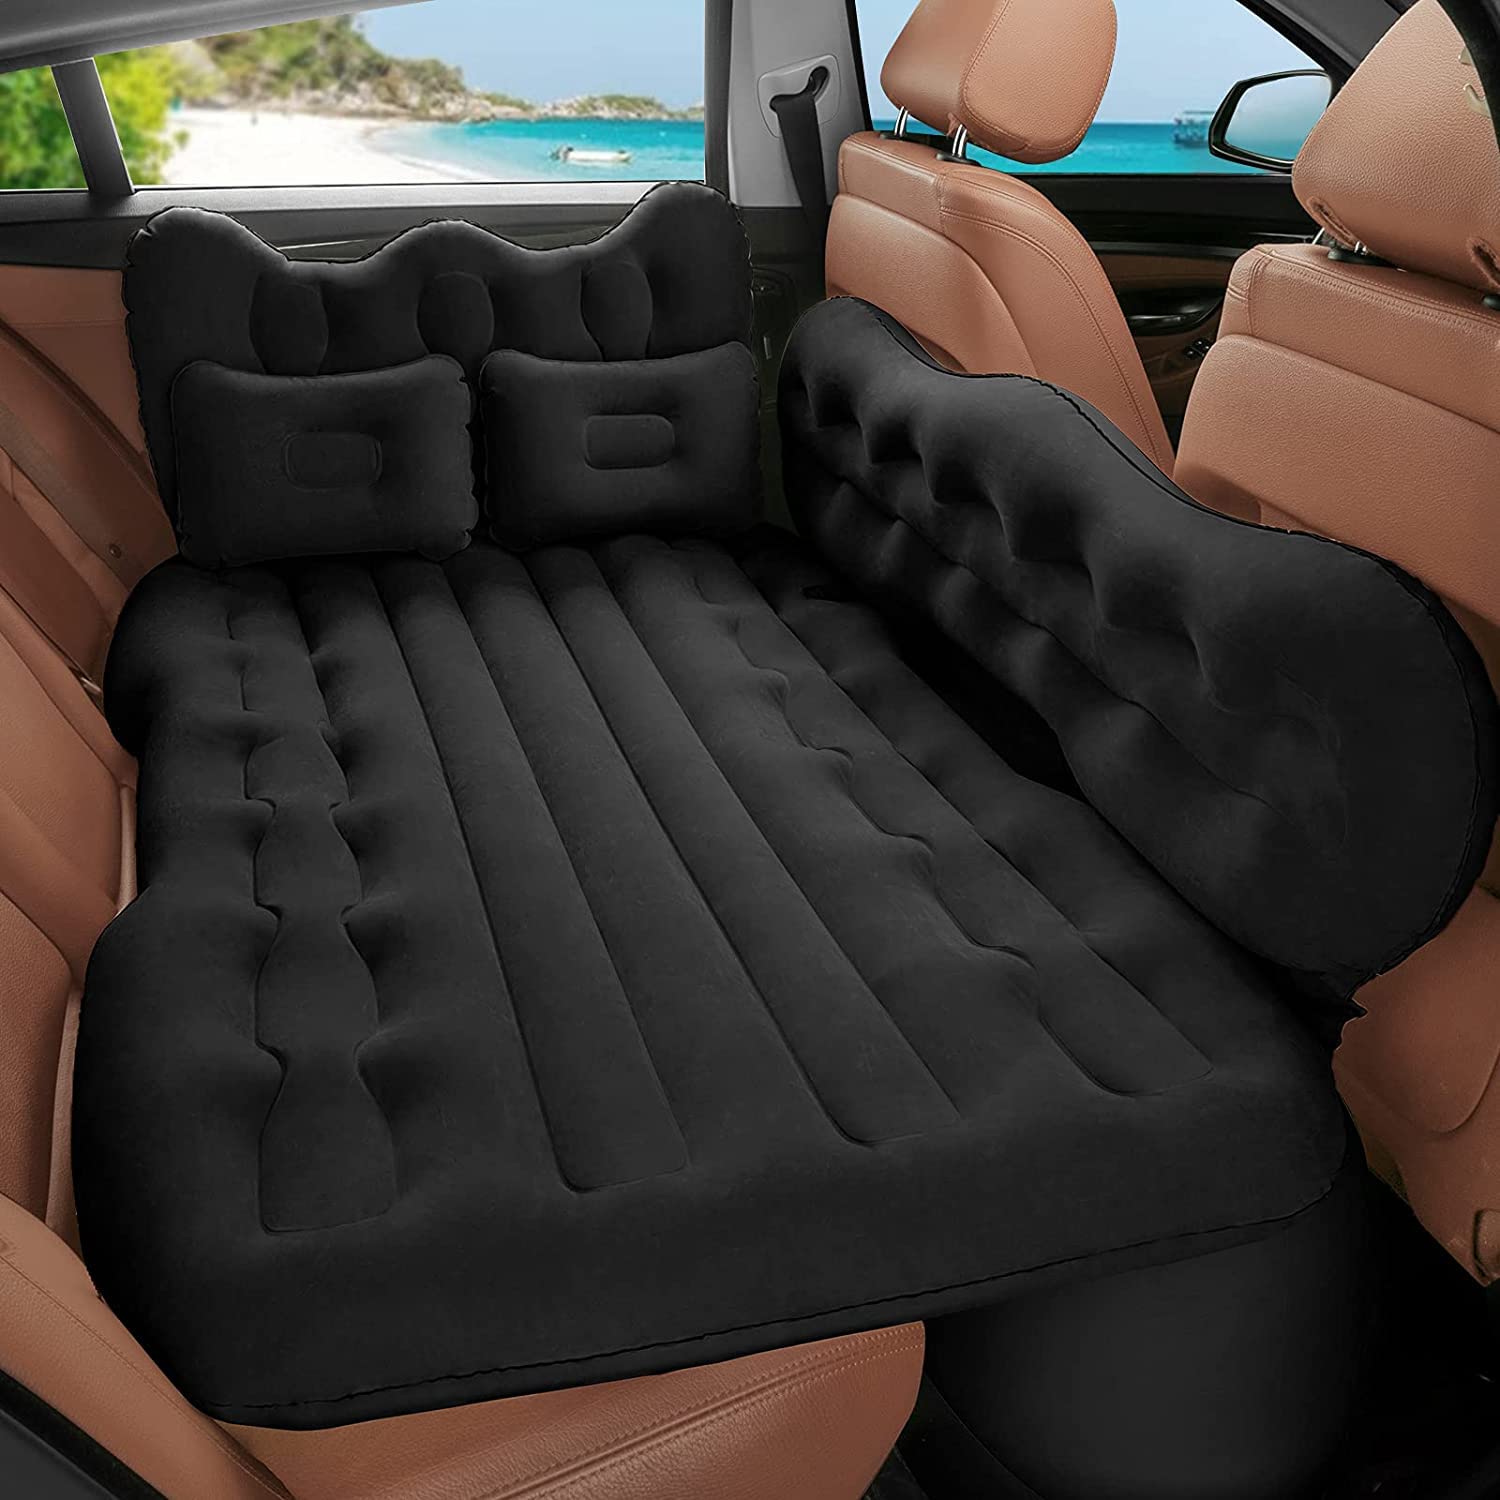 Amazon.com: SINYWON Car Air Mattress Inflatable Bed for Car, Backseat Car Air Mattress Sleeping, SUV Camping Luxury Upgrade Side File with Air Pump fits SUV/Sedan/Minivan – Black : Automotive